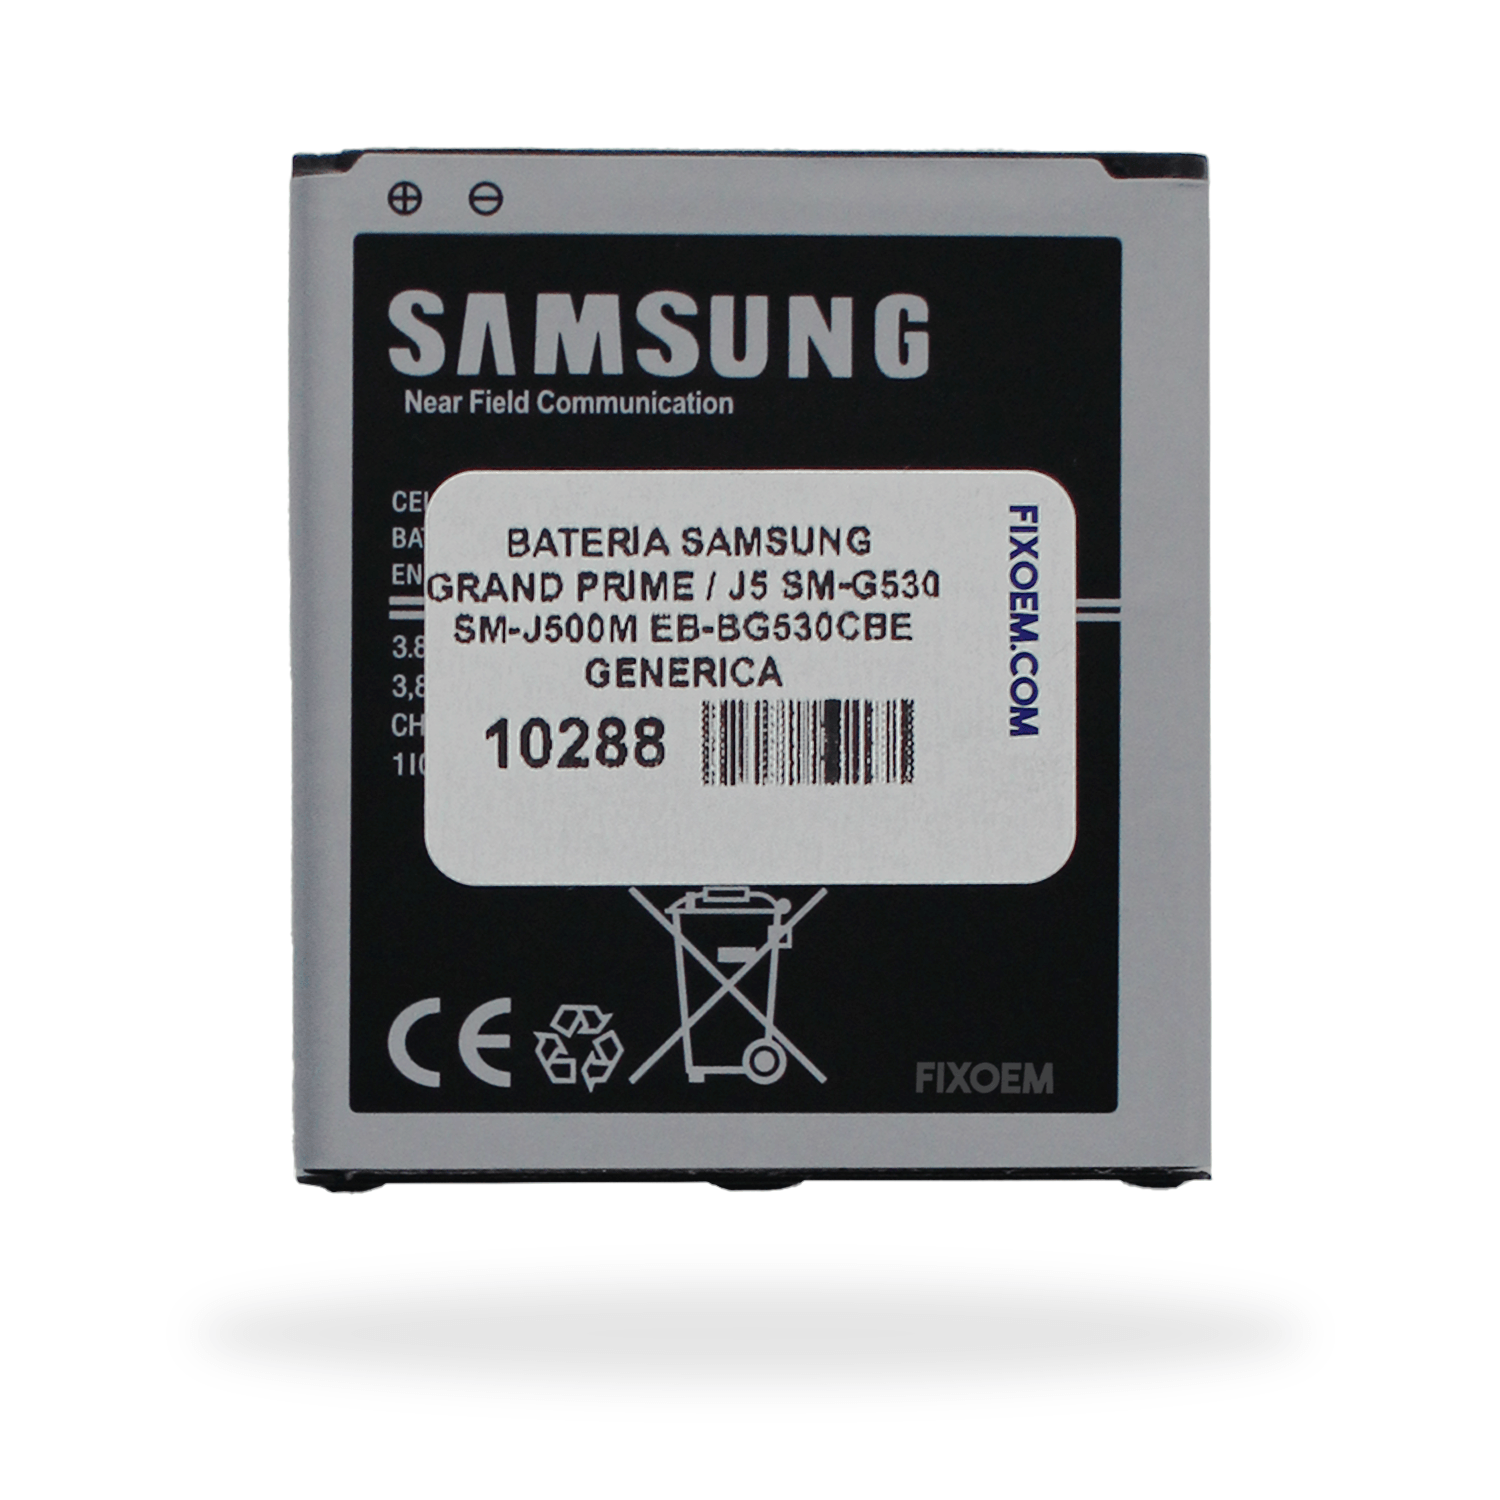 Bateria Samsung Grand Prime /J5 /S4 Sm-G530 Sm-J500M Eb-Bg530Cbe a solo $ 80.00 Refaccion y puestos celulares, refurbish y microelectronica.- FixOEM